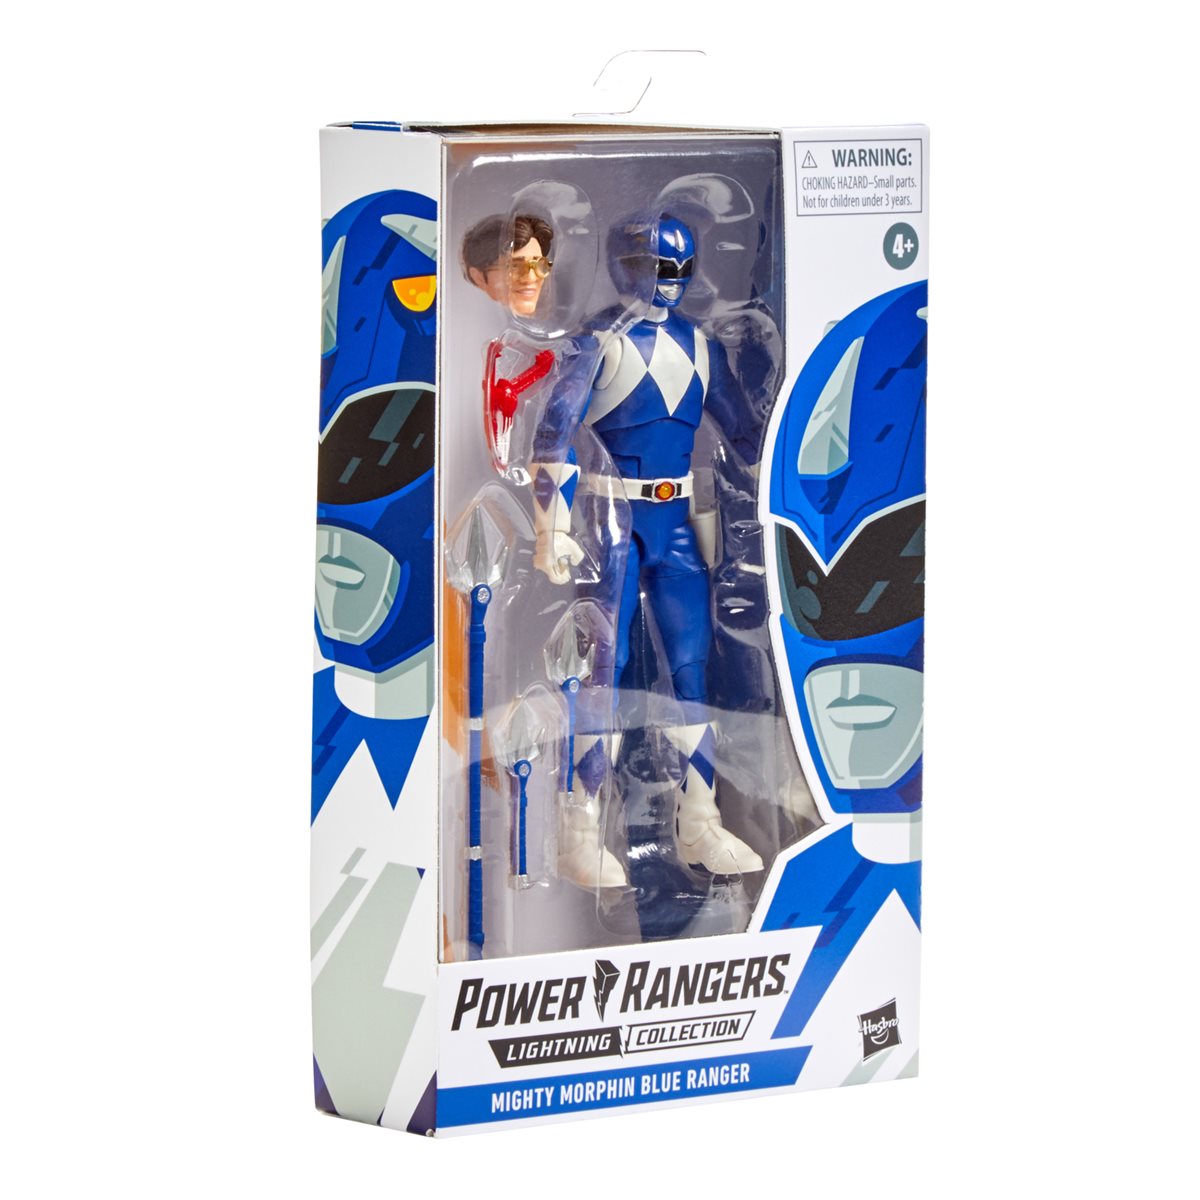 Power Rangers Lightning Collection Lot/Bundle Ranger Slayer,Mighty Morphin Blue